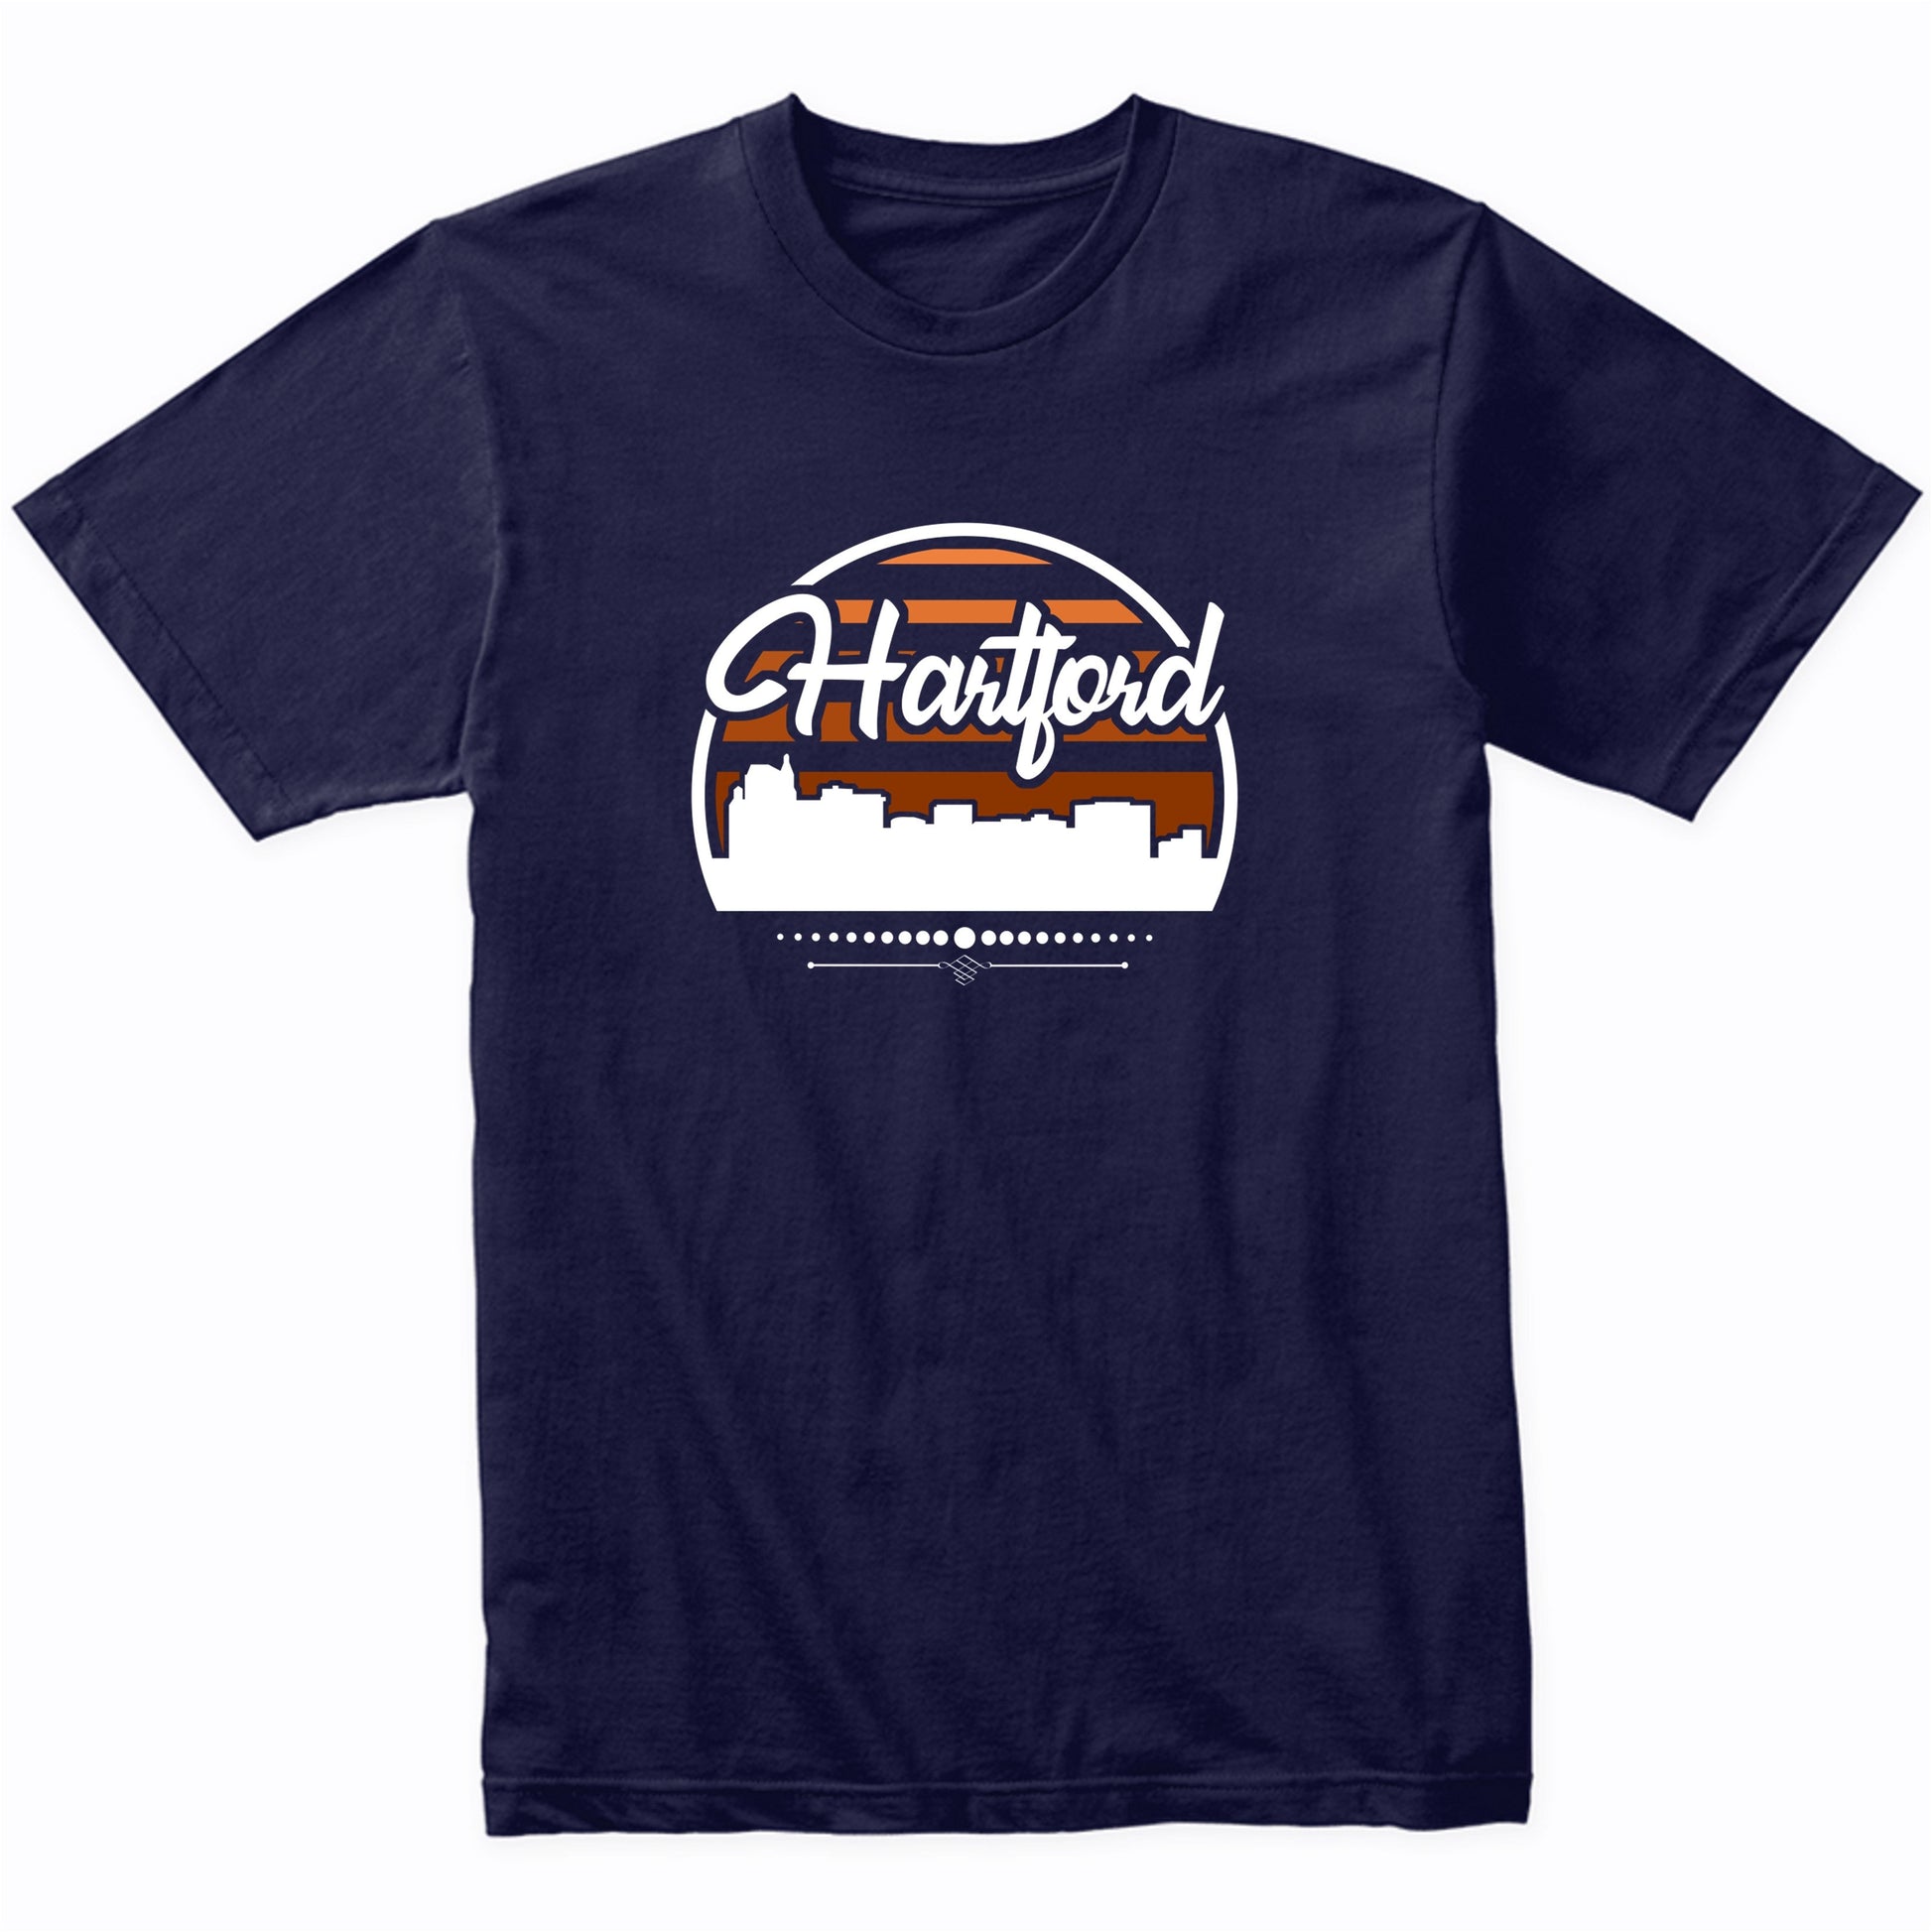 Retro Hartford Connecticut Sunset Skyline T-Shirt